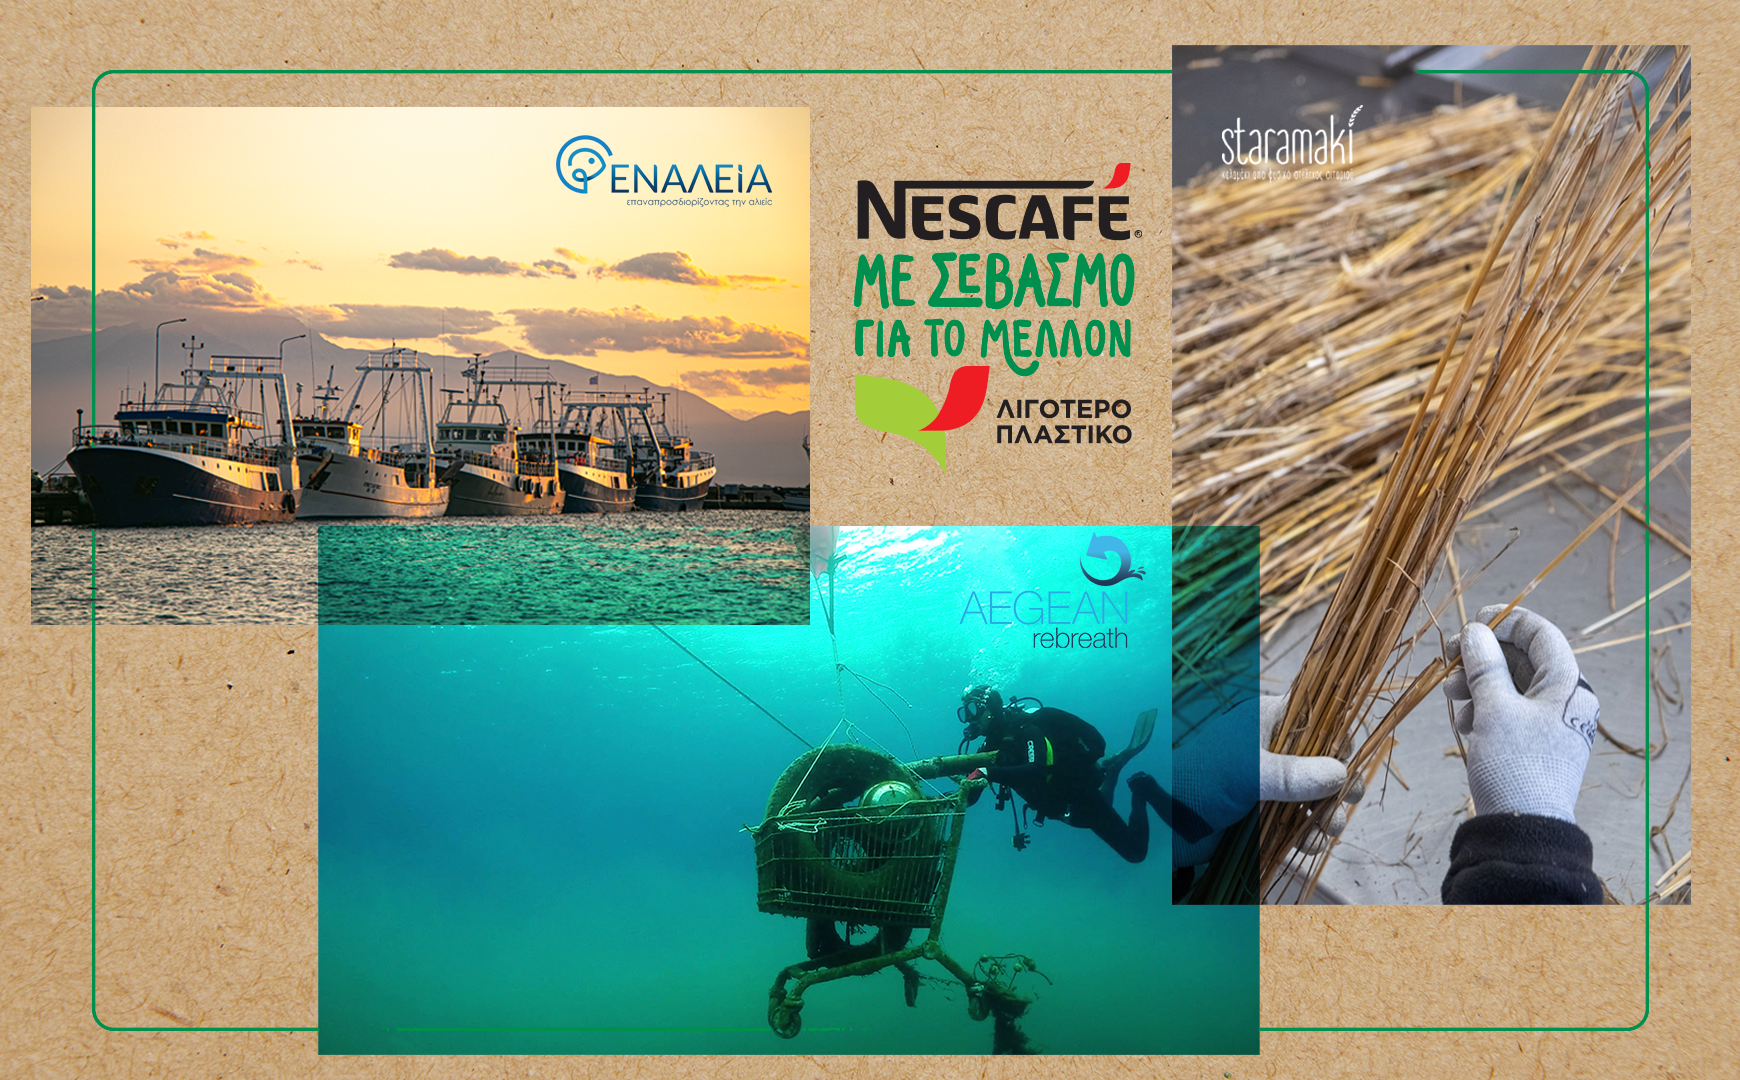 Nescafé: Νέα πρωτοβουλία για την αντιμετώπιση της πλαστικής ρύπανσης